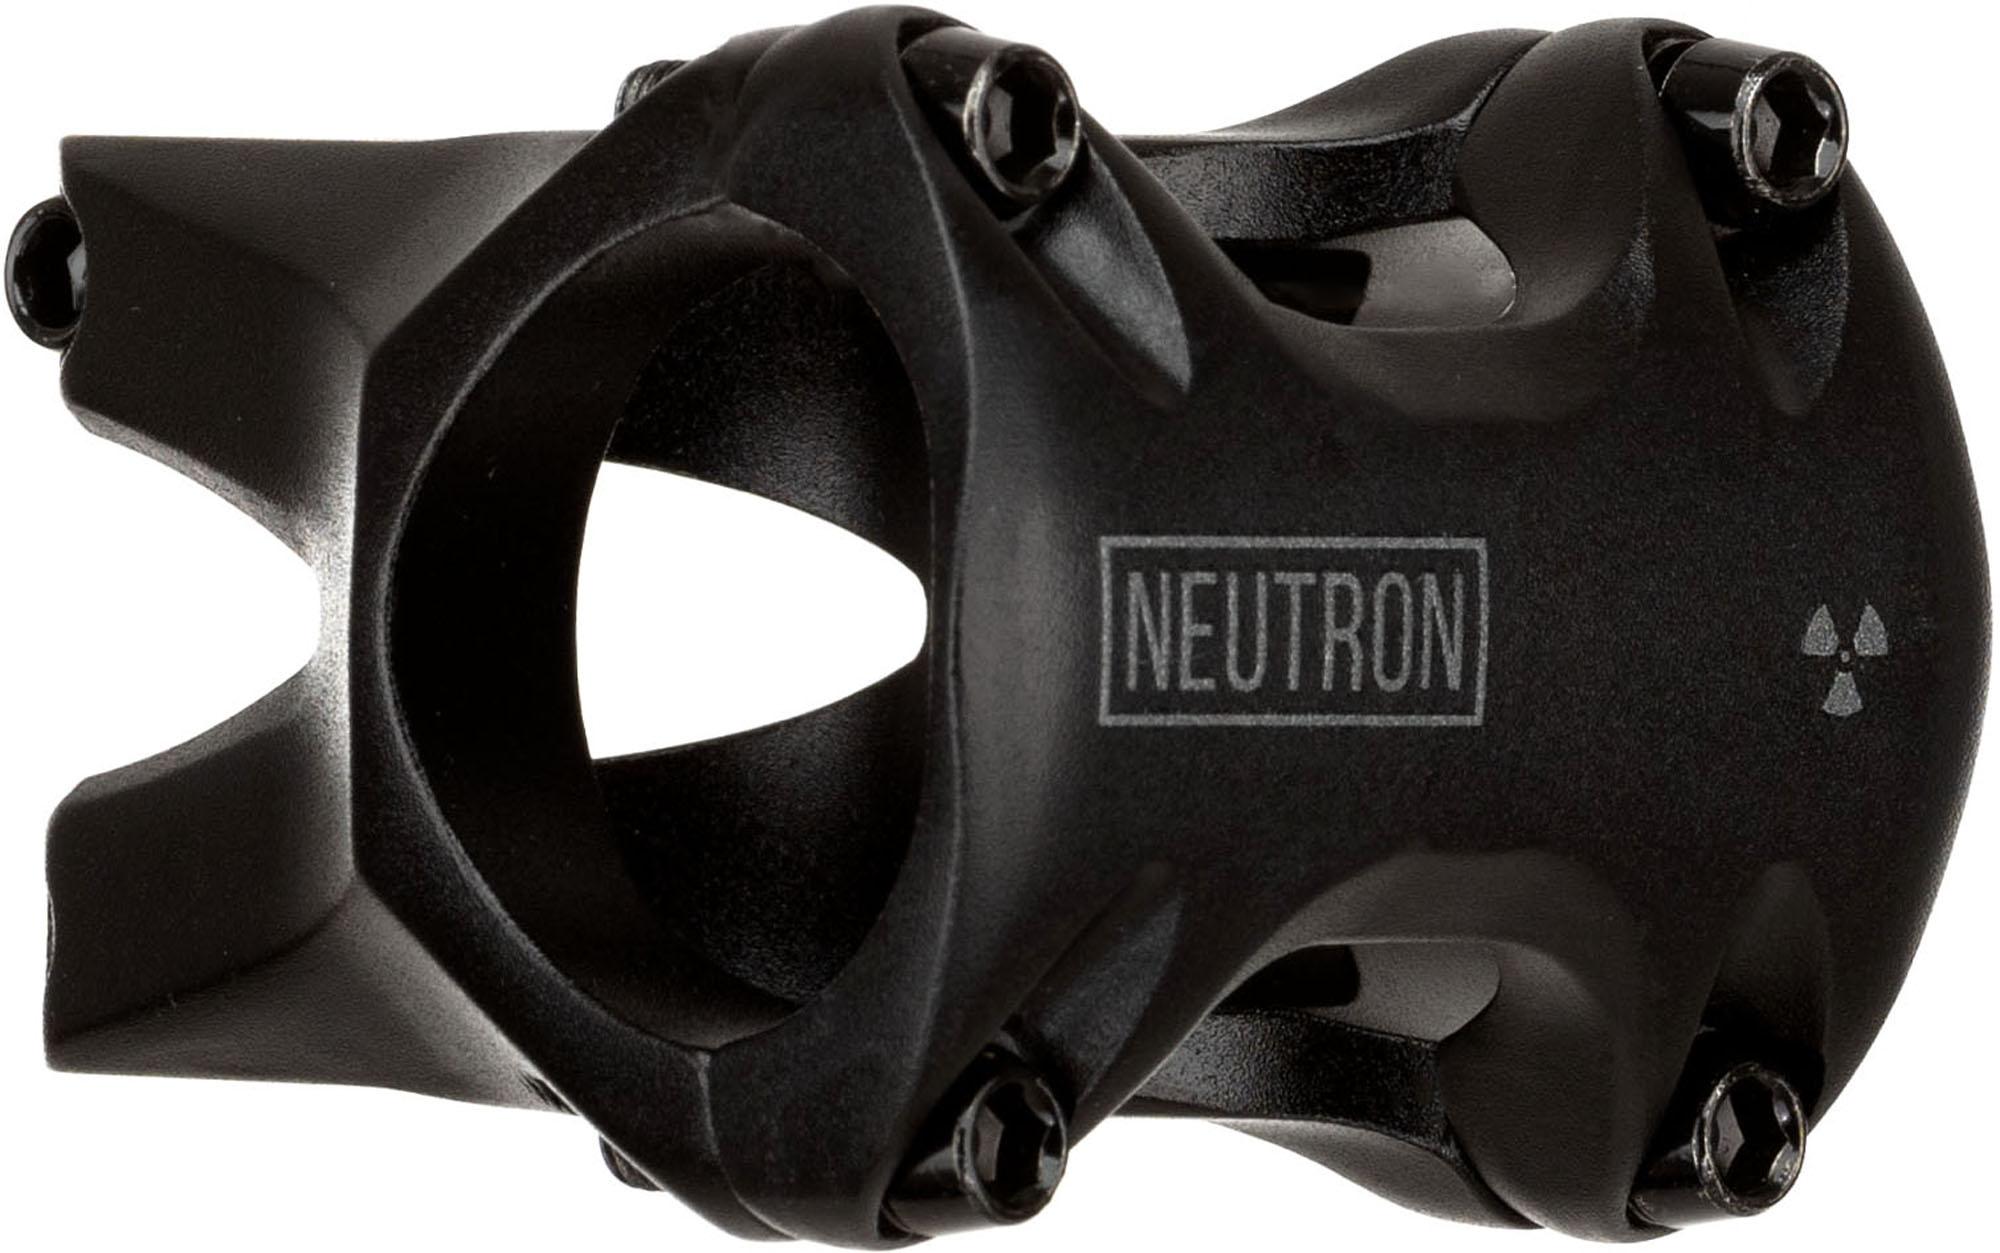 Nukeproof Neutron Am Stem - Black/grey